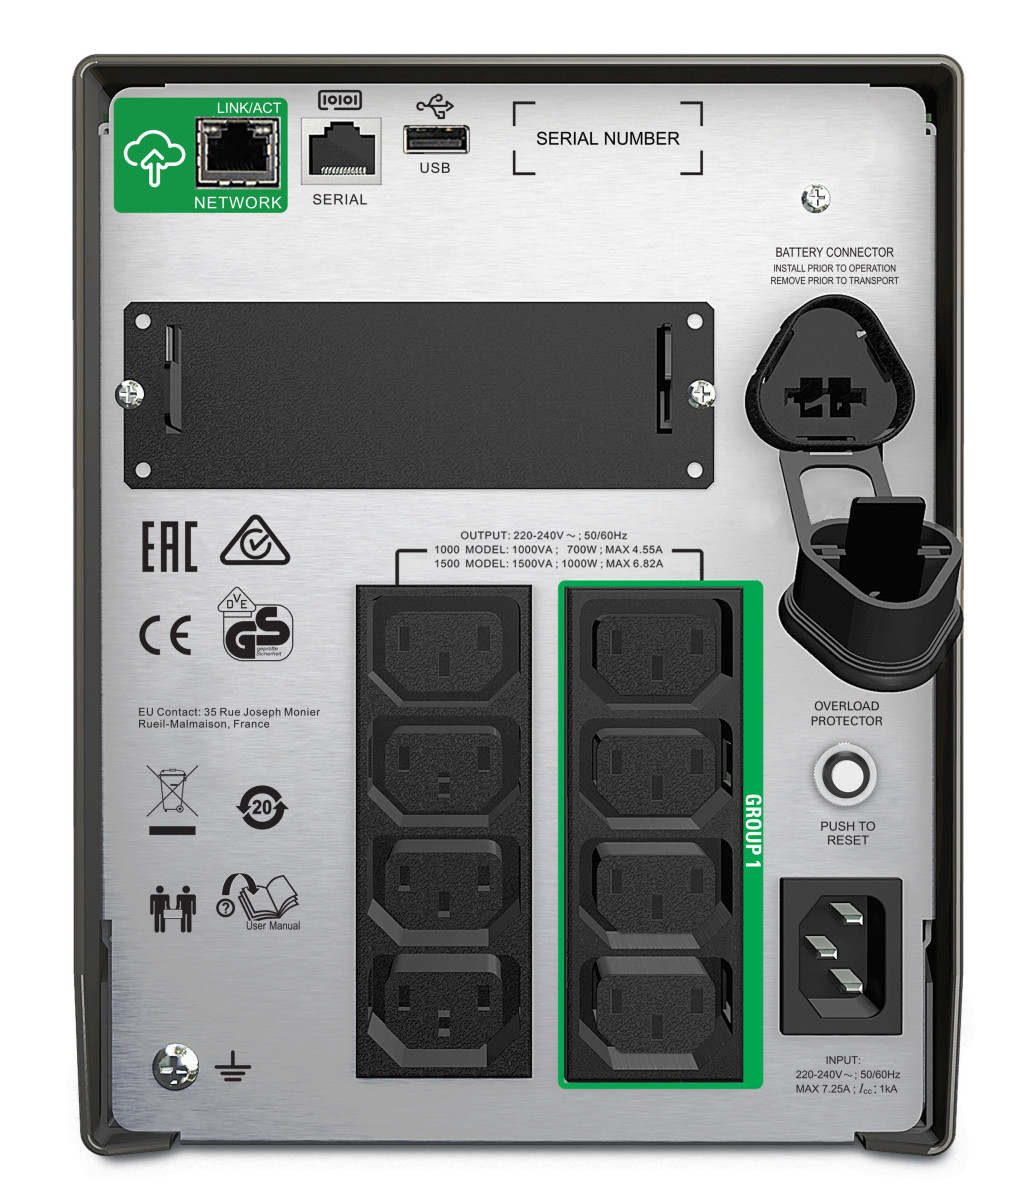 Smart-UPS 1KVA LCD 230V SmartConnect